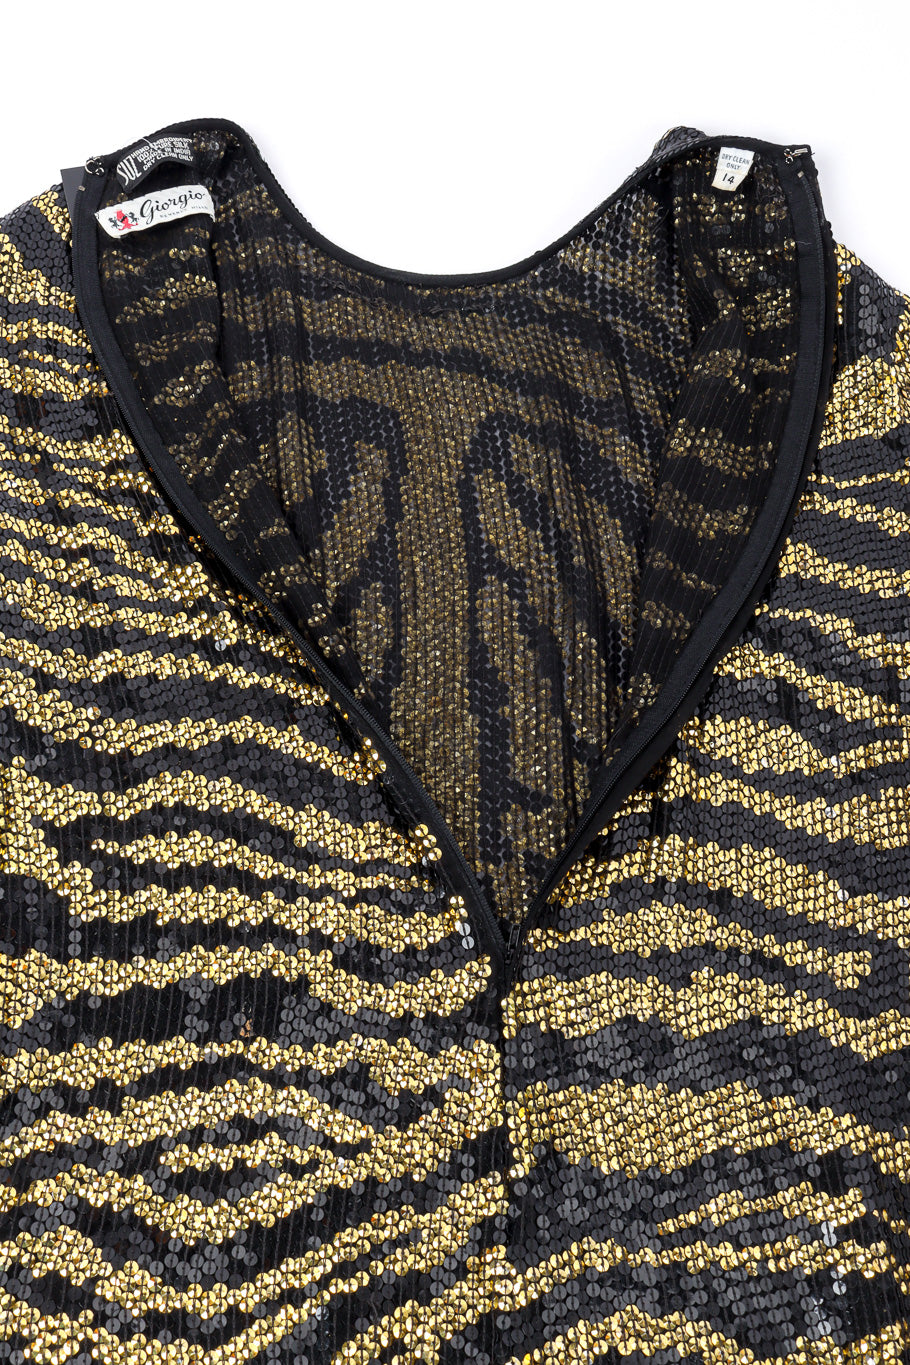 Vintage Halston Tiger Sequin Sheath Gown back unzipped @recessla